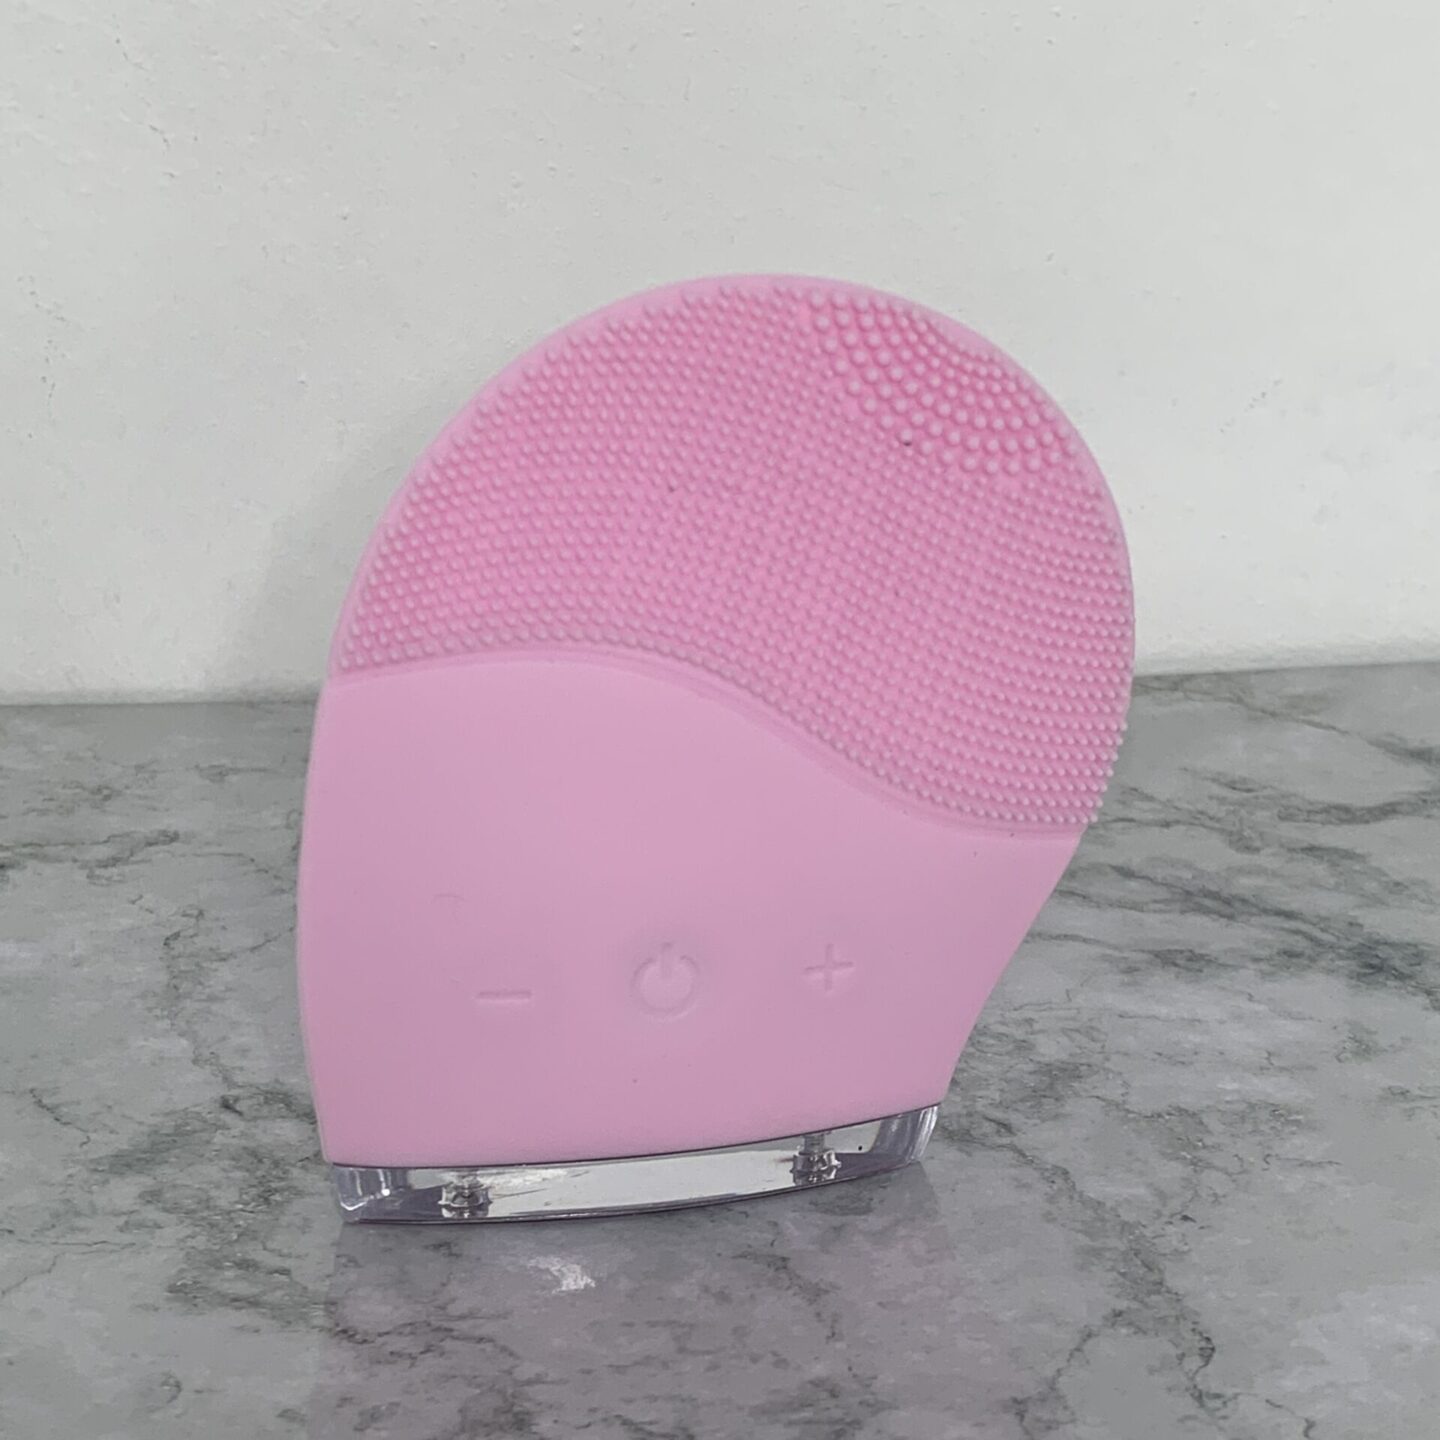 Aldi Lacura Silicone Facial Cleanser for Sensitive Skin in Pink